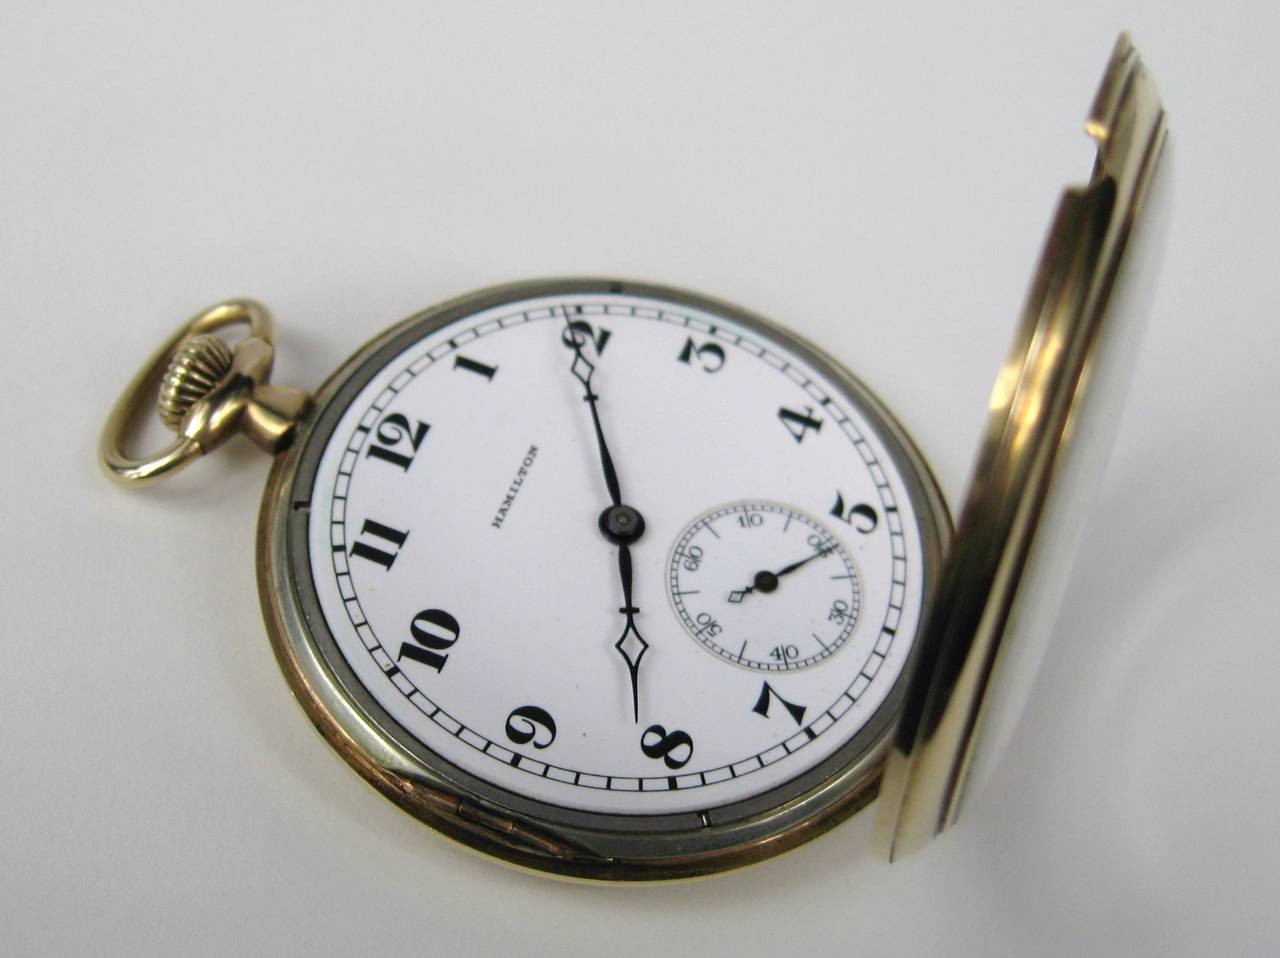 Antique Hamilton Open Face 14K Gold Pocket Watch 
17 Jewel adjusted 3 positions
Measures 1.83